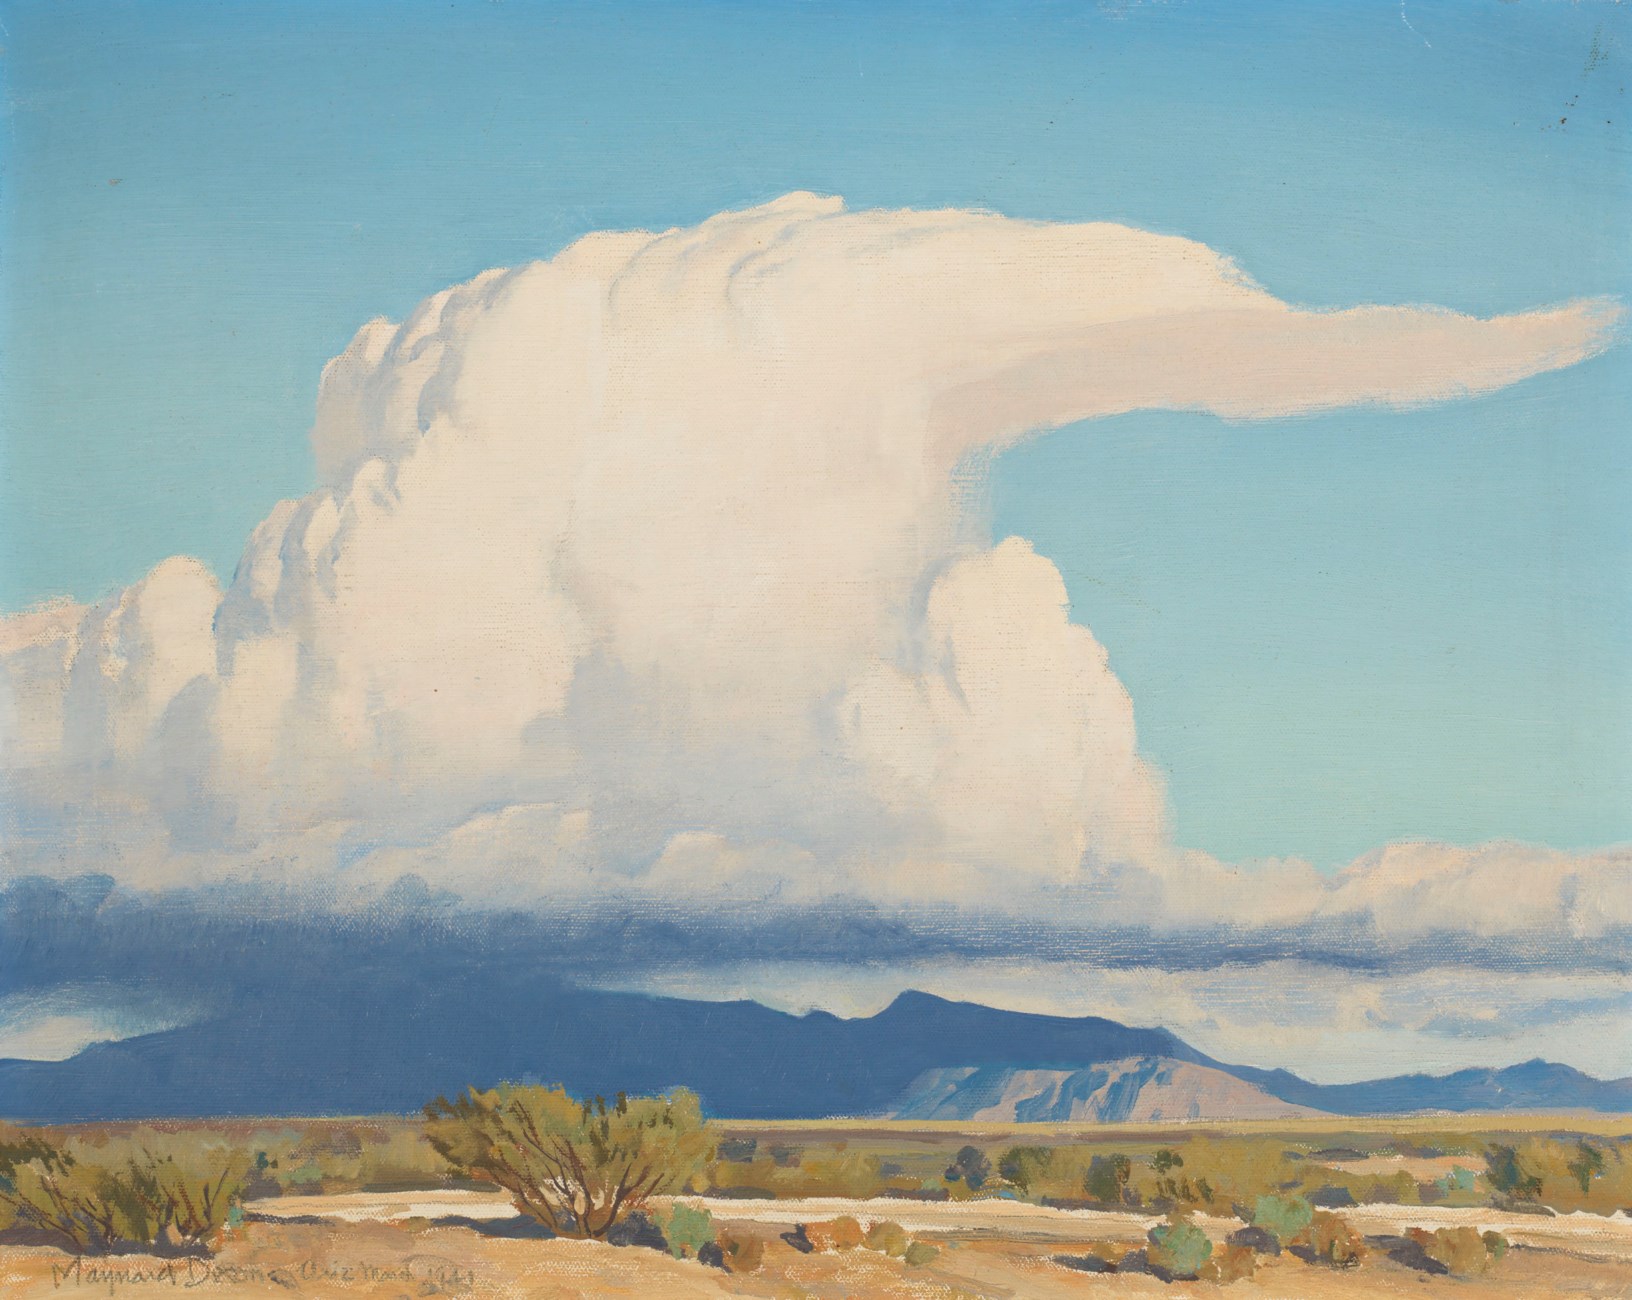 Chmura by Maynard Dixon - 1941 - 40,6 × 50,8 cm 